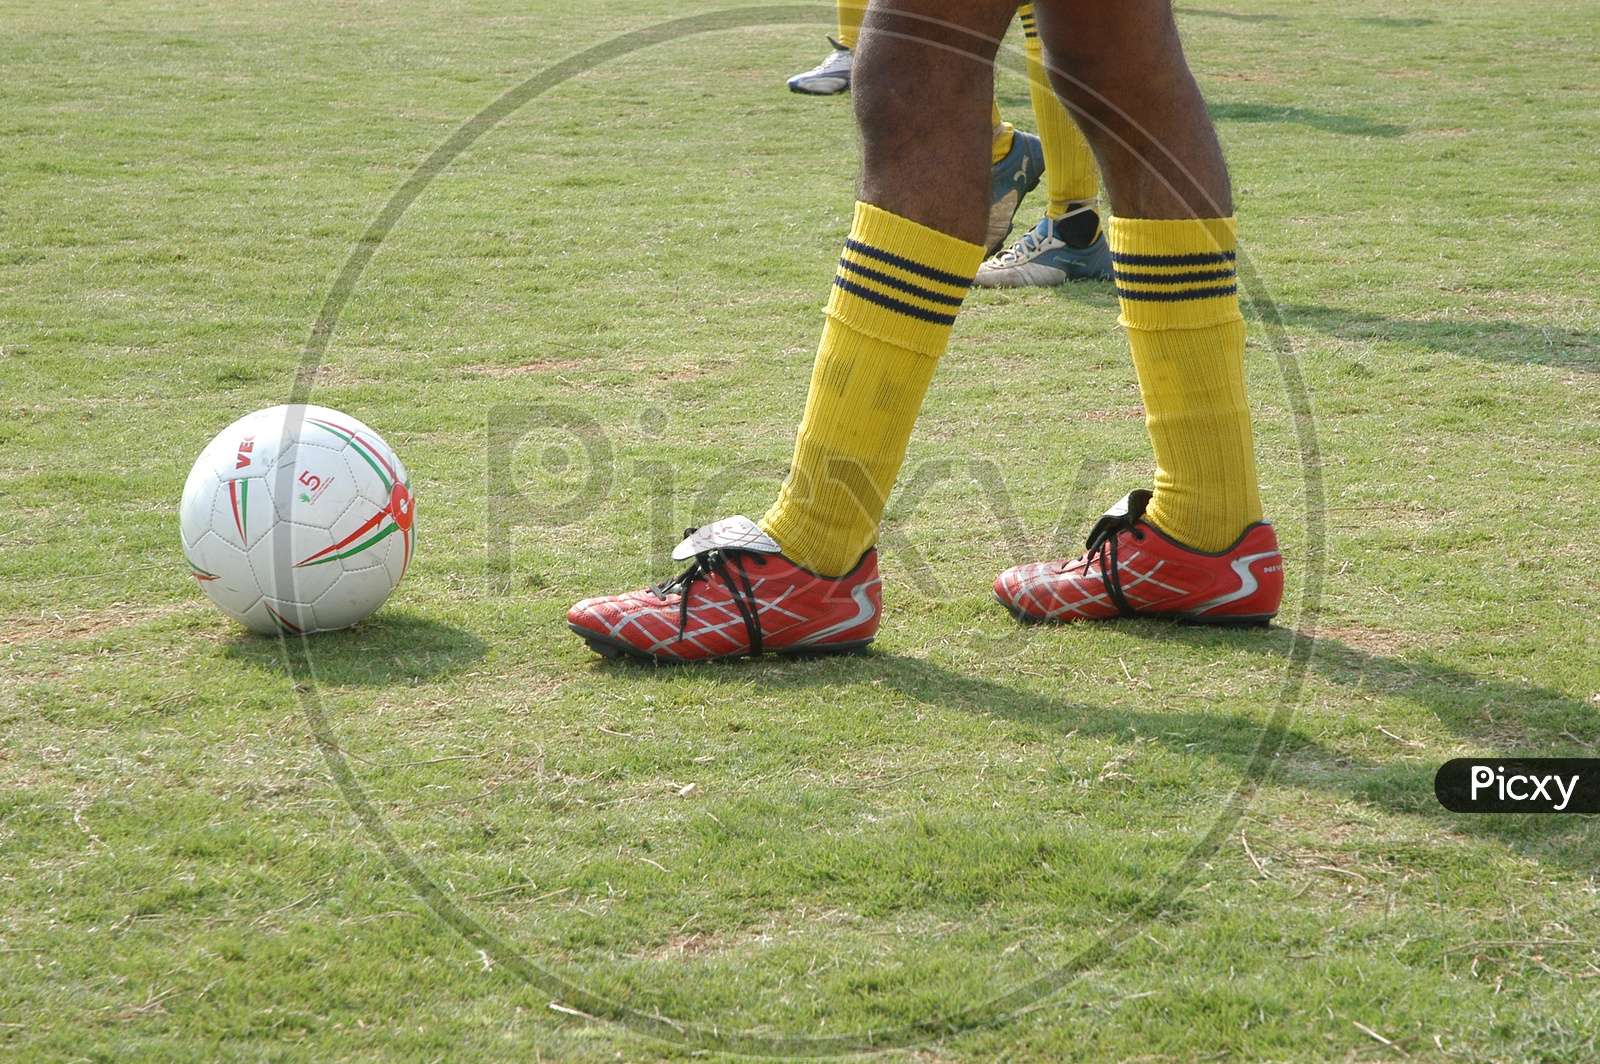 A Football Player Shoe And Ball Closeup